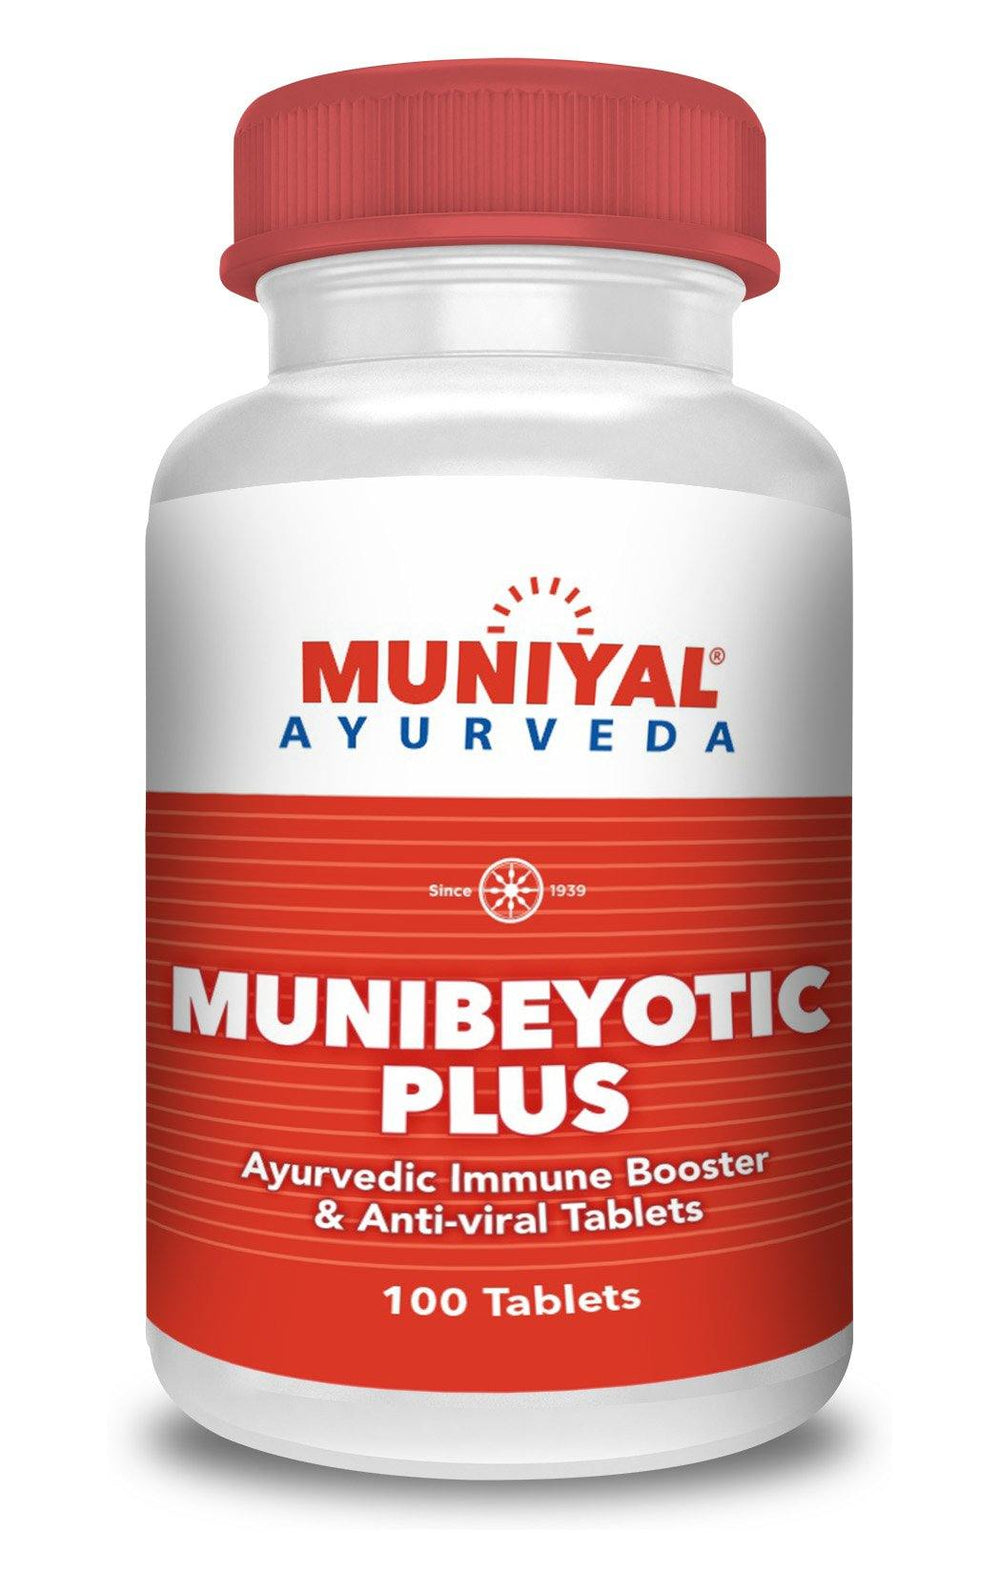 MUNIBEYOTIC PLUS Tablets - Muniyal Ayurveda